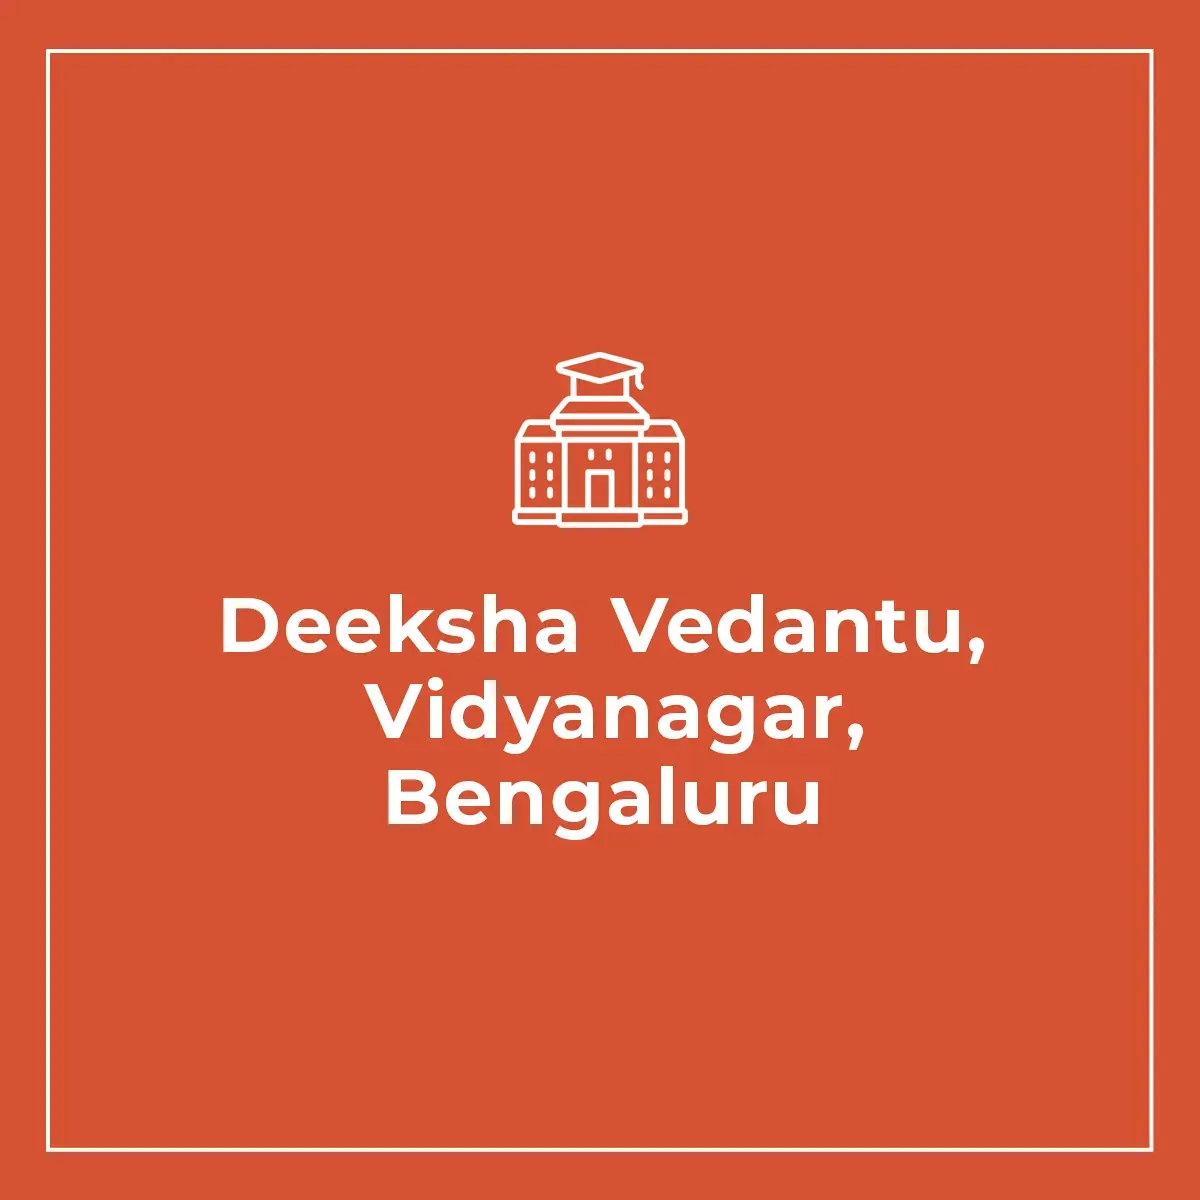 Deeksha Vedantu, Vidyanagar, Bengaluru